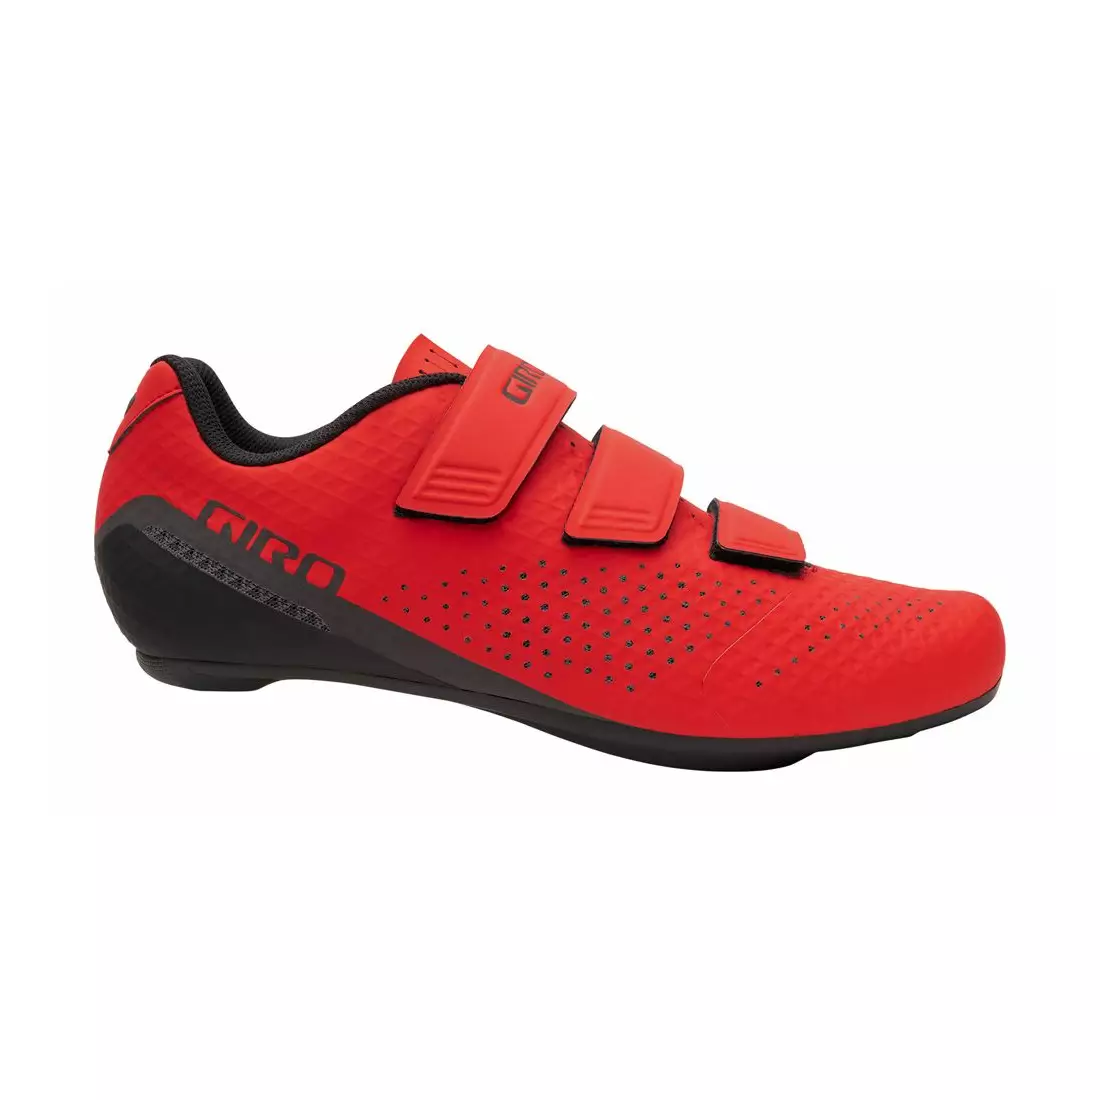 GIRO férfi kerékpáros cipő STYLUS bright red GR-7126156